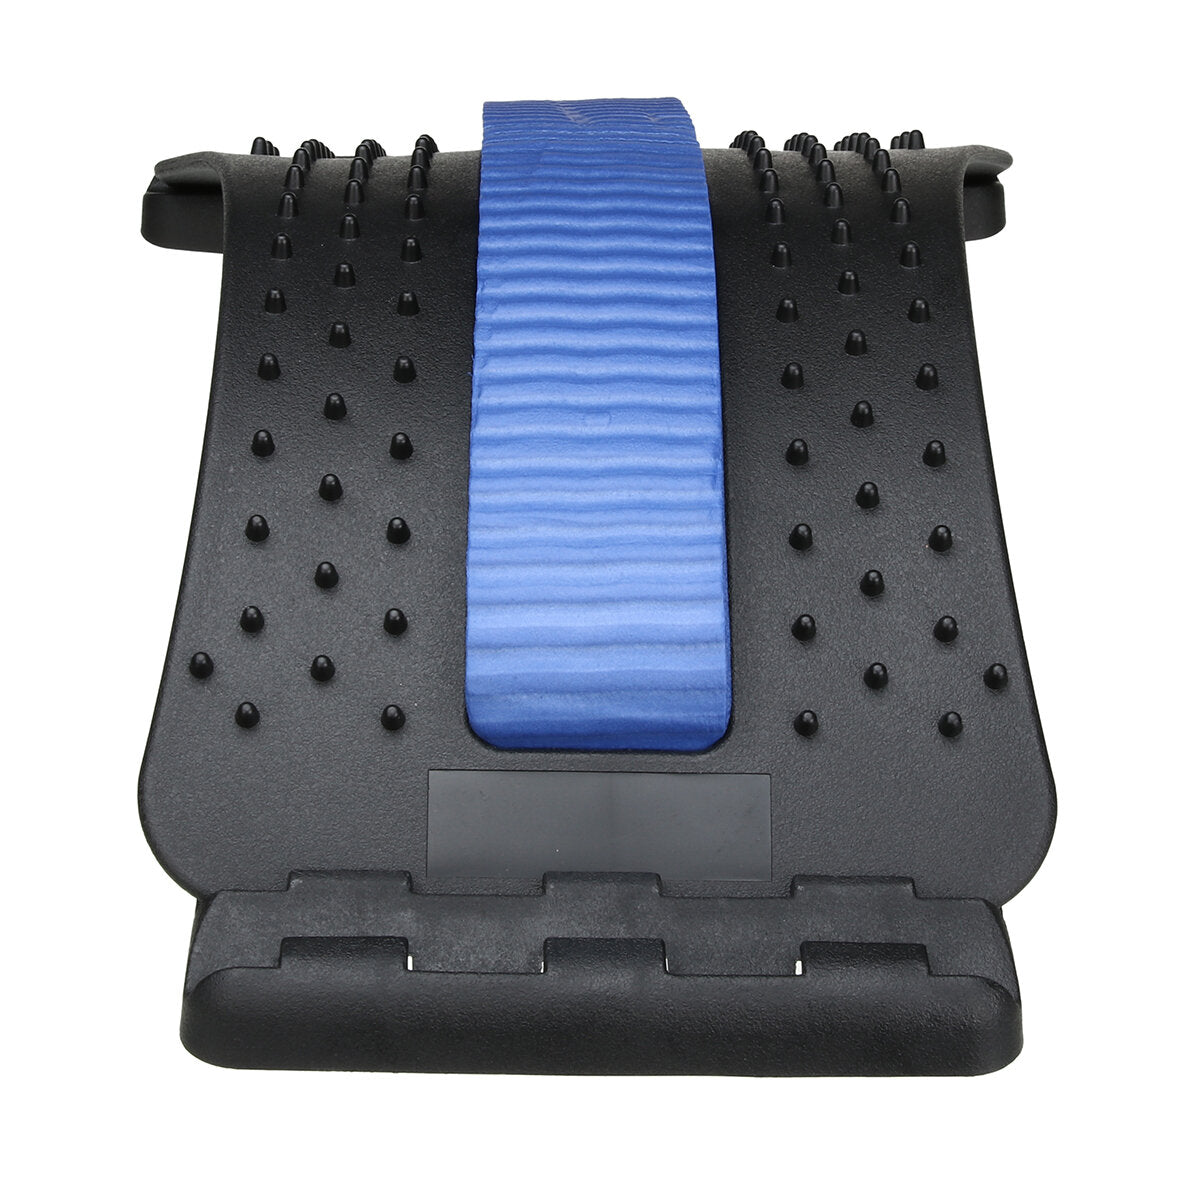 3 Levels Adjustable Back Massage Posture Corrector Stretch Abdominal Lumbar Support Fitness Core Trainer